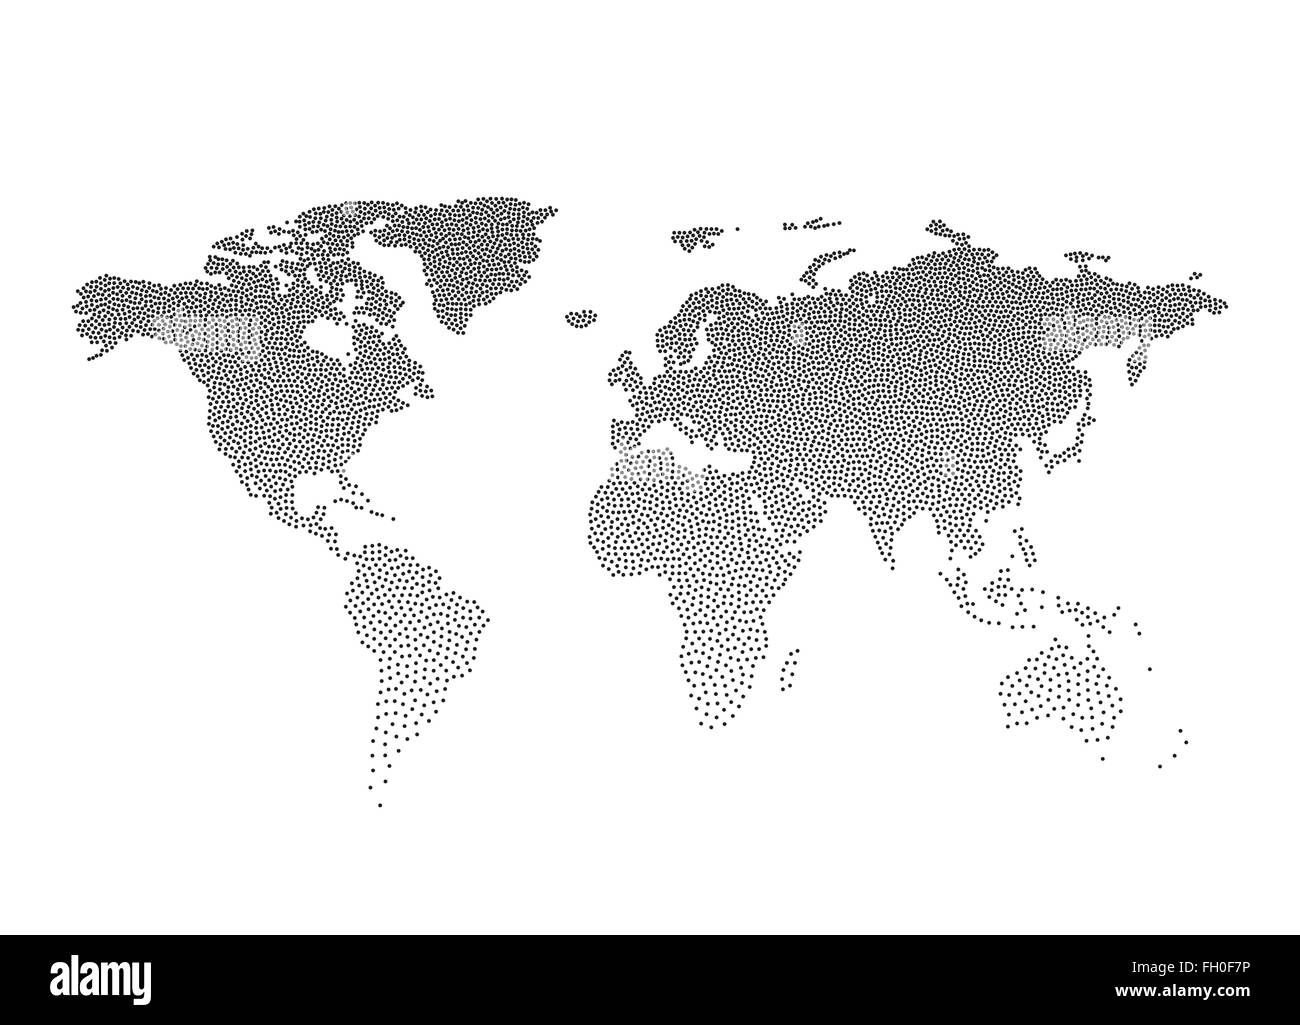 Schwarz gepunktet Weltkarte. Vektor-illustration Stock Vektor